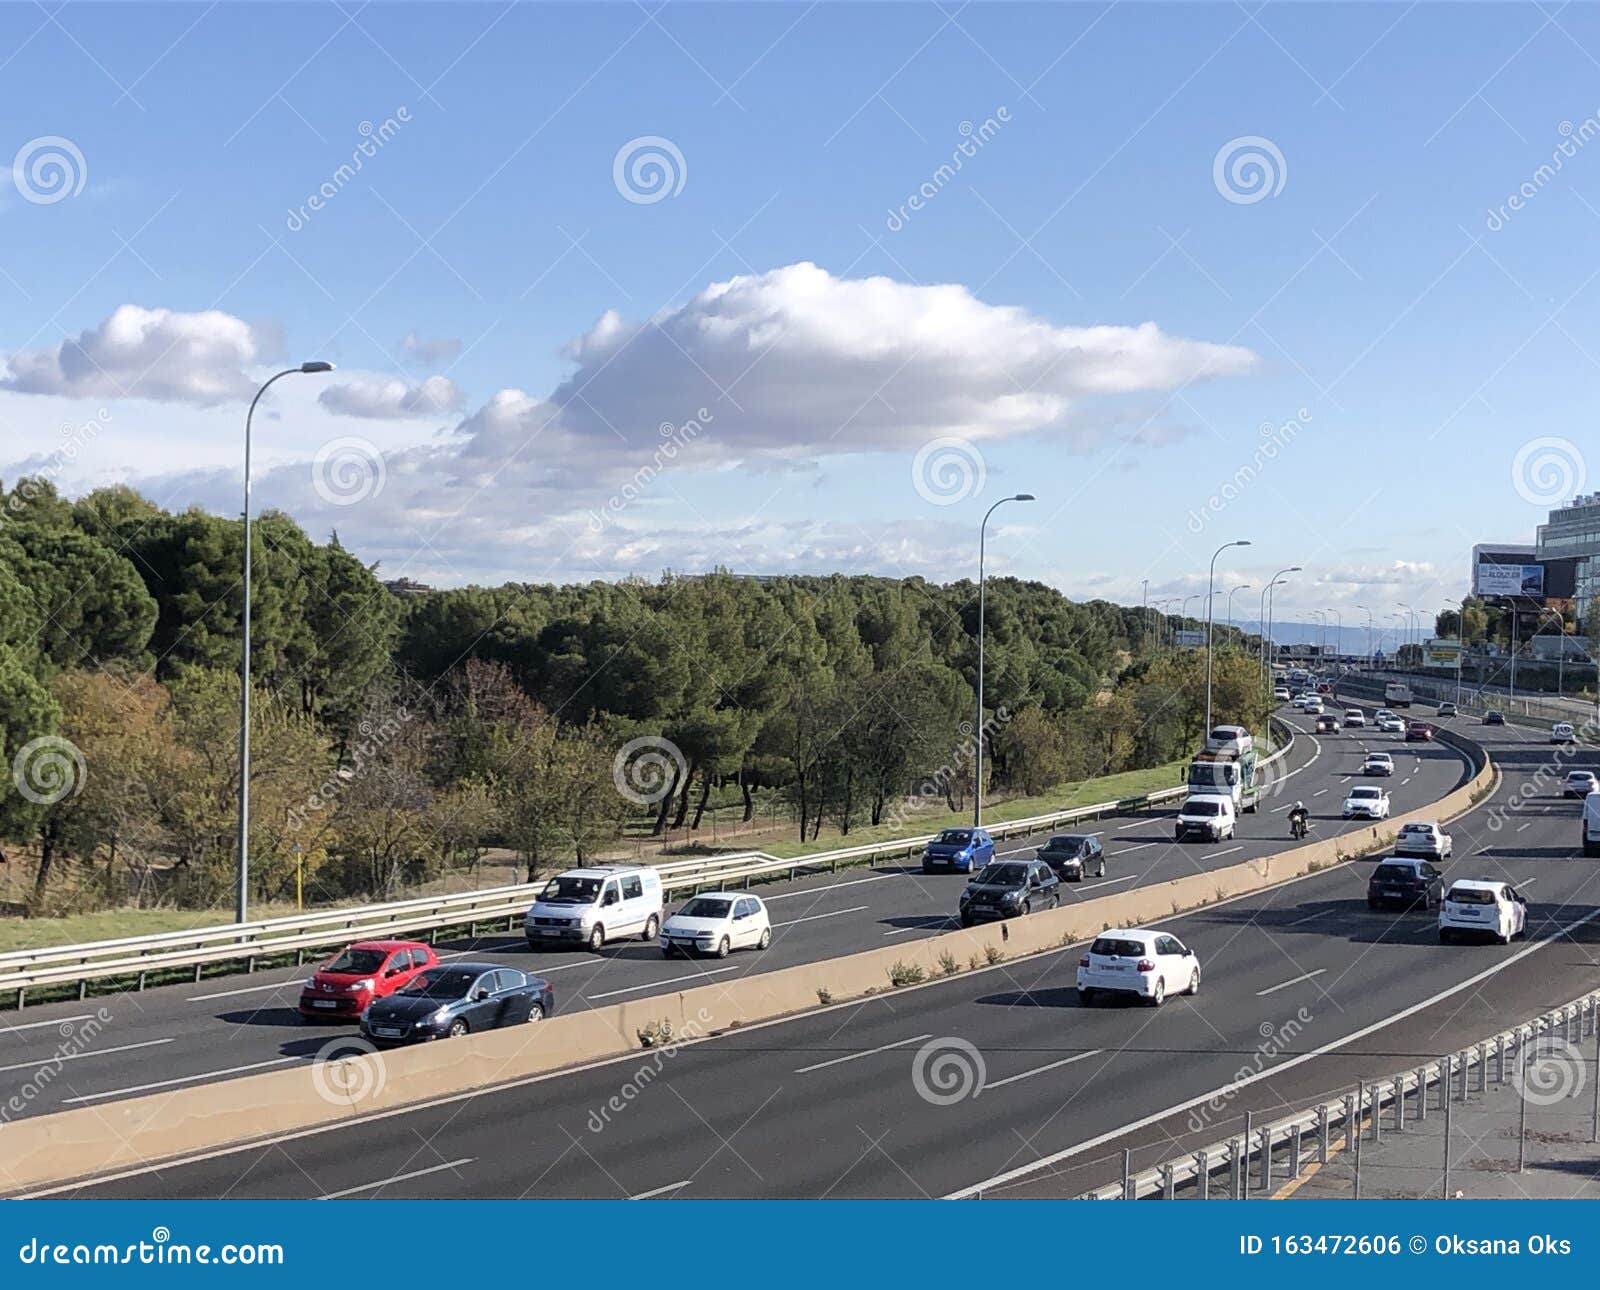 Madrid highway traffic stock photo. Image of highway - 163472606